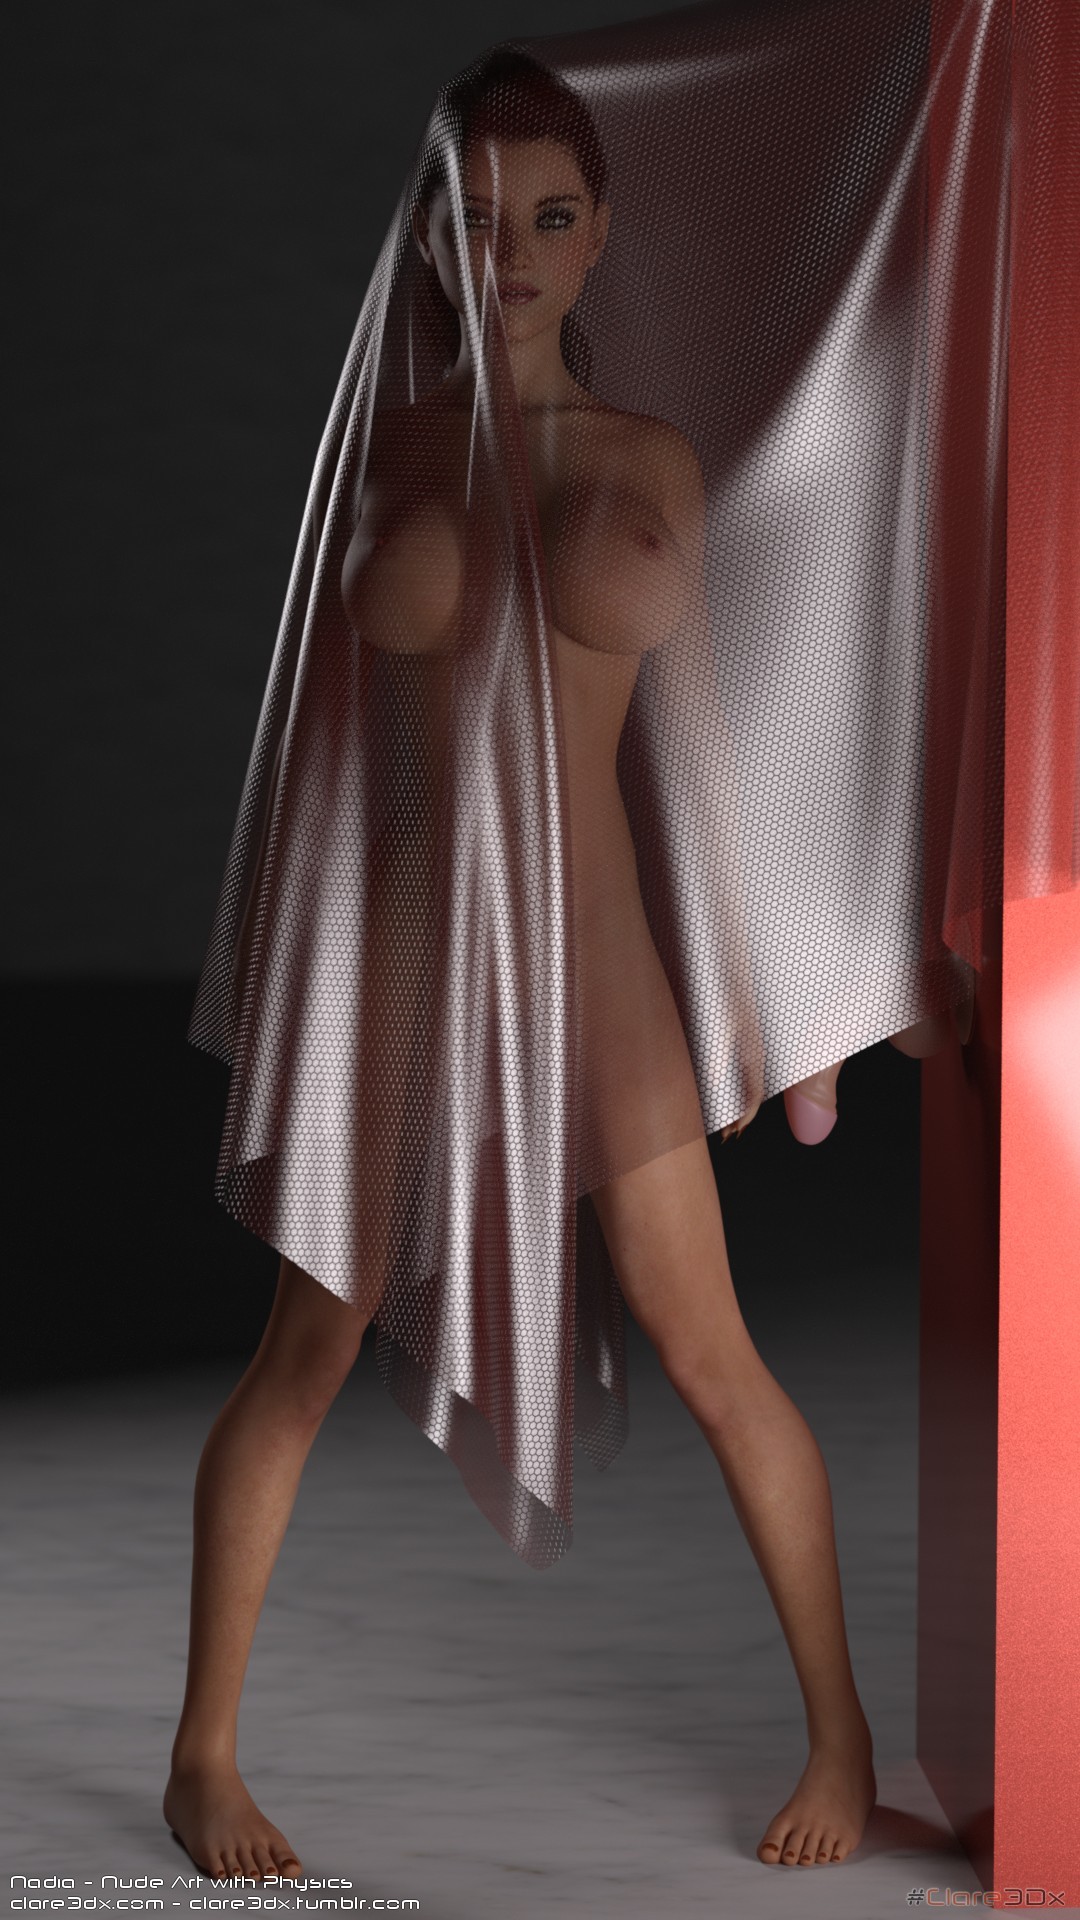 Post 626: Nadia, New Girl &amp; Nude Art with PhysicsMeet Irisa’s roommate..